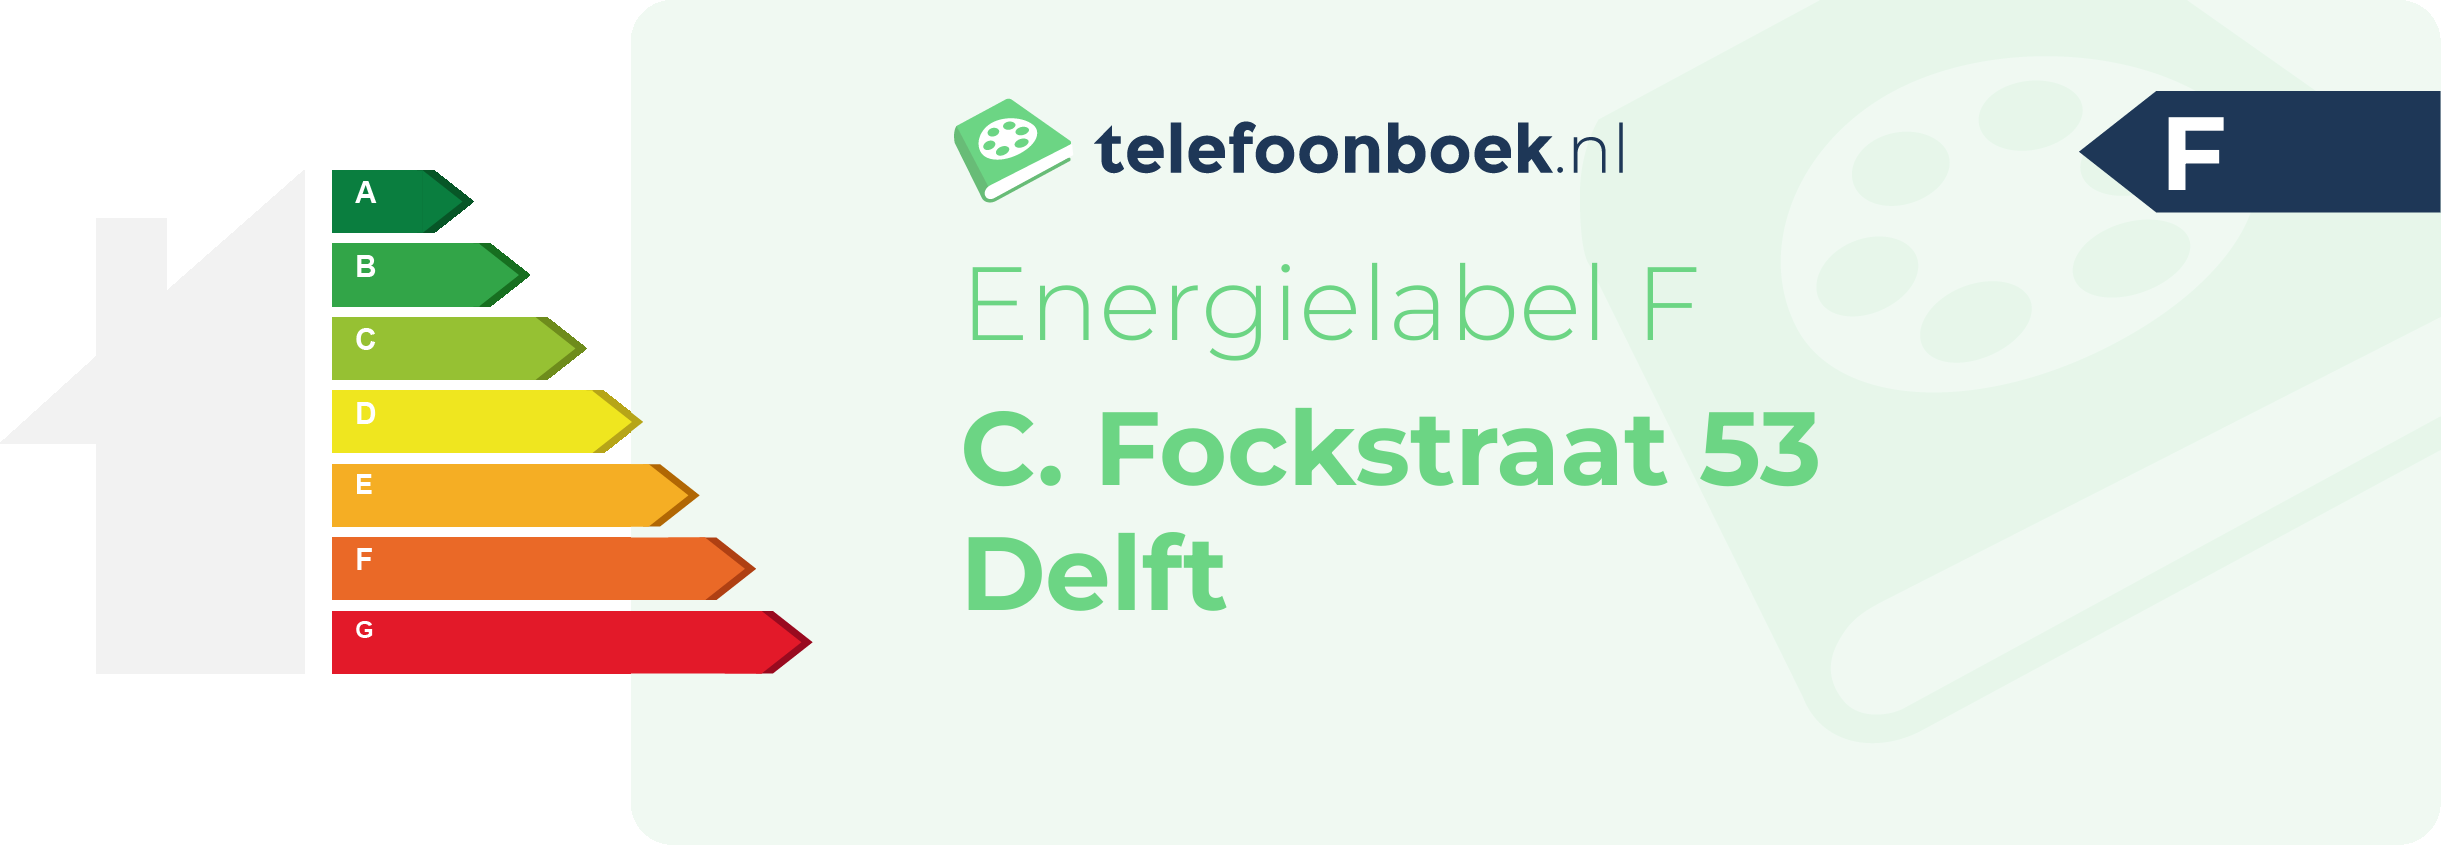 Energielabel C. Fockstraat 53 Delft